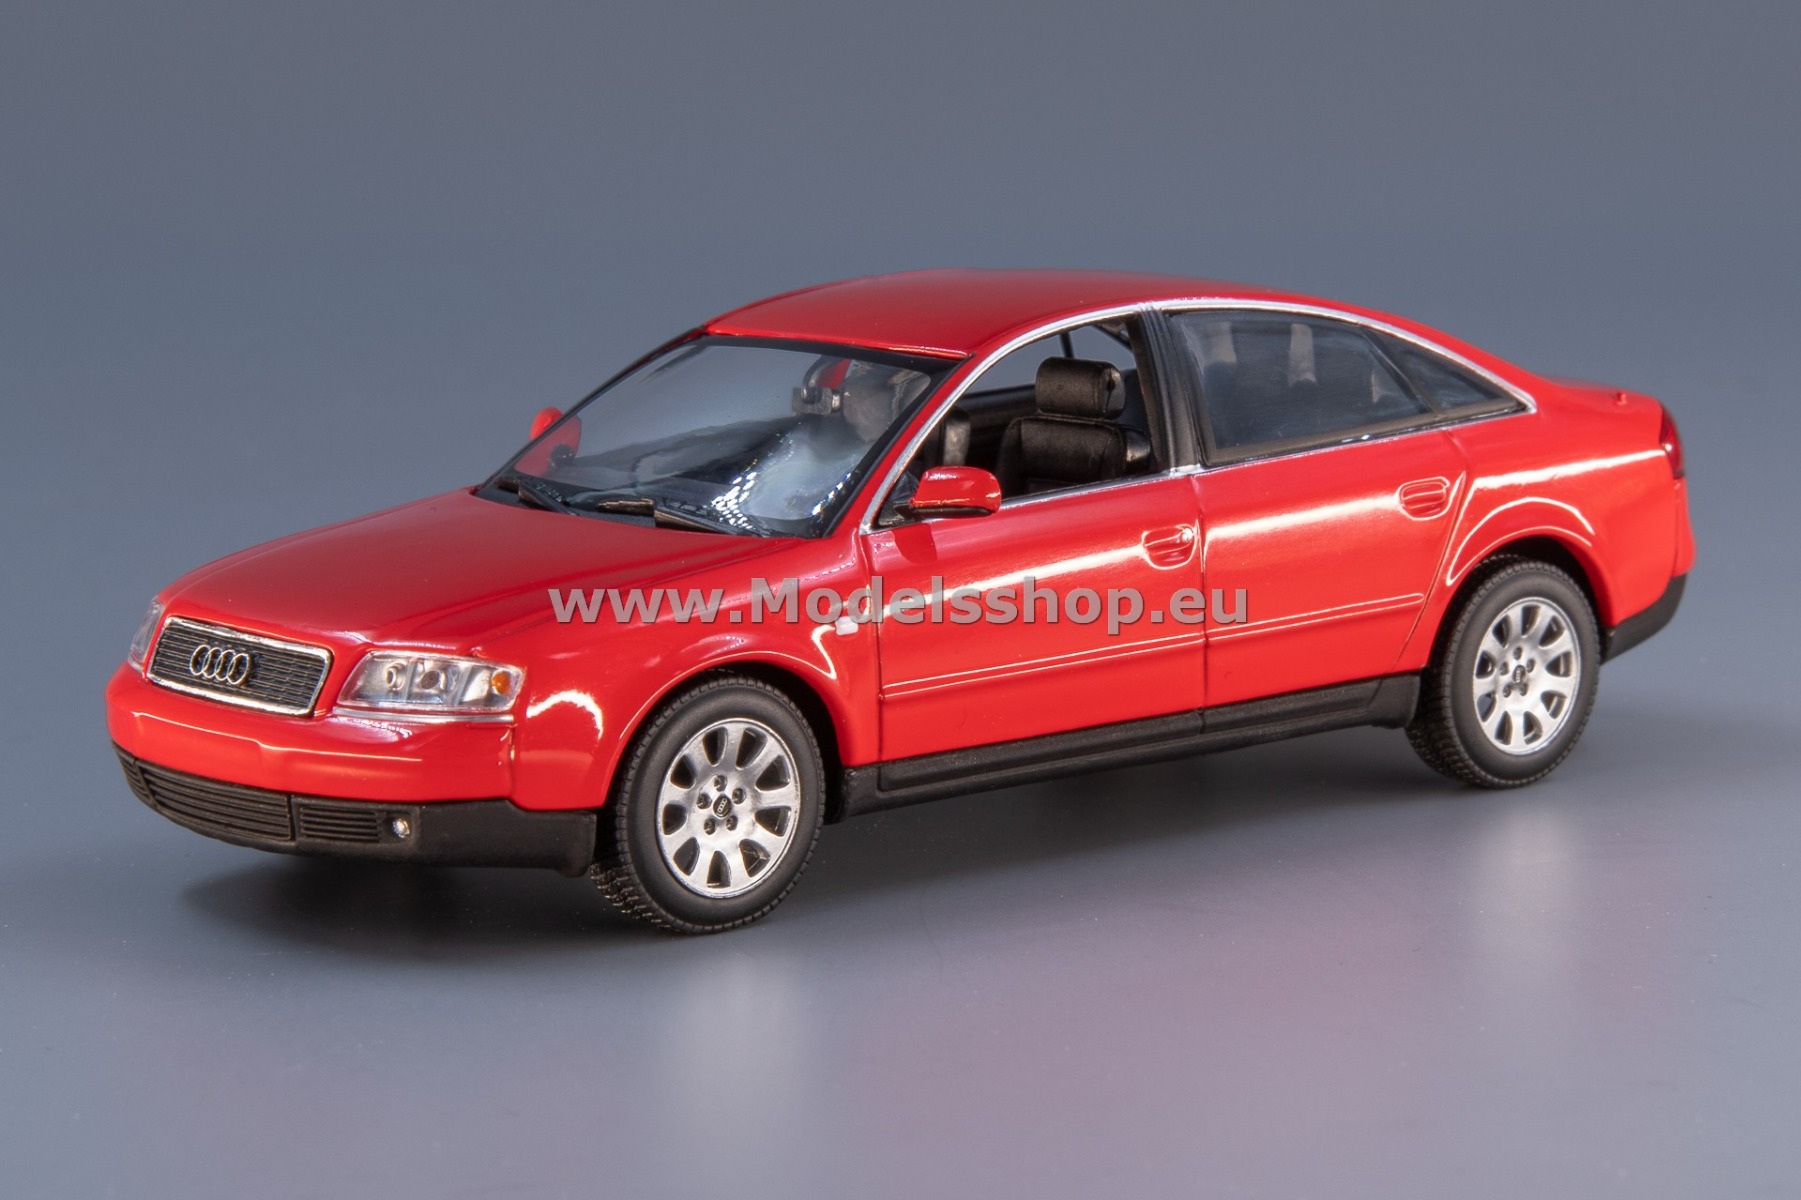 Maxichamps 940017100 Audi A6, 1997 /red/